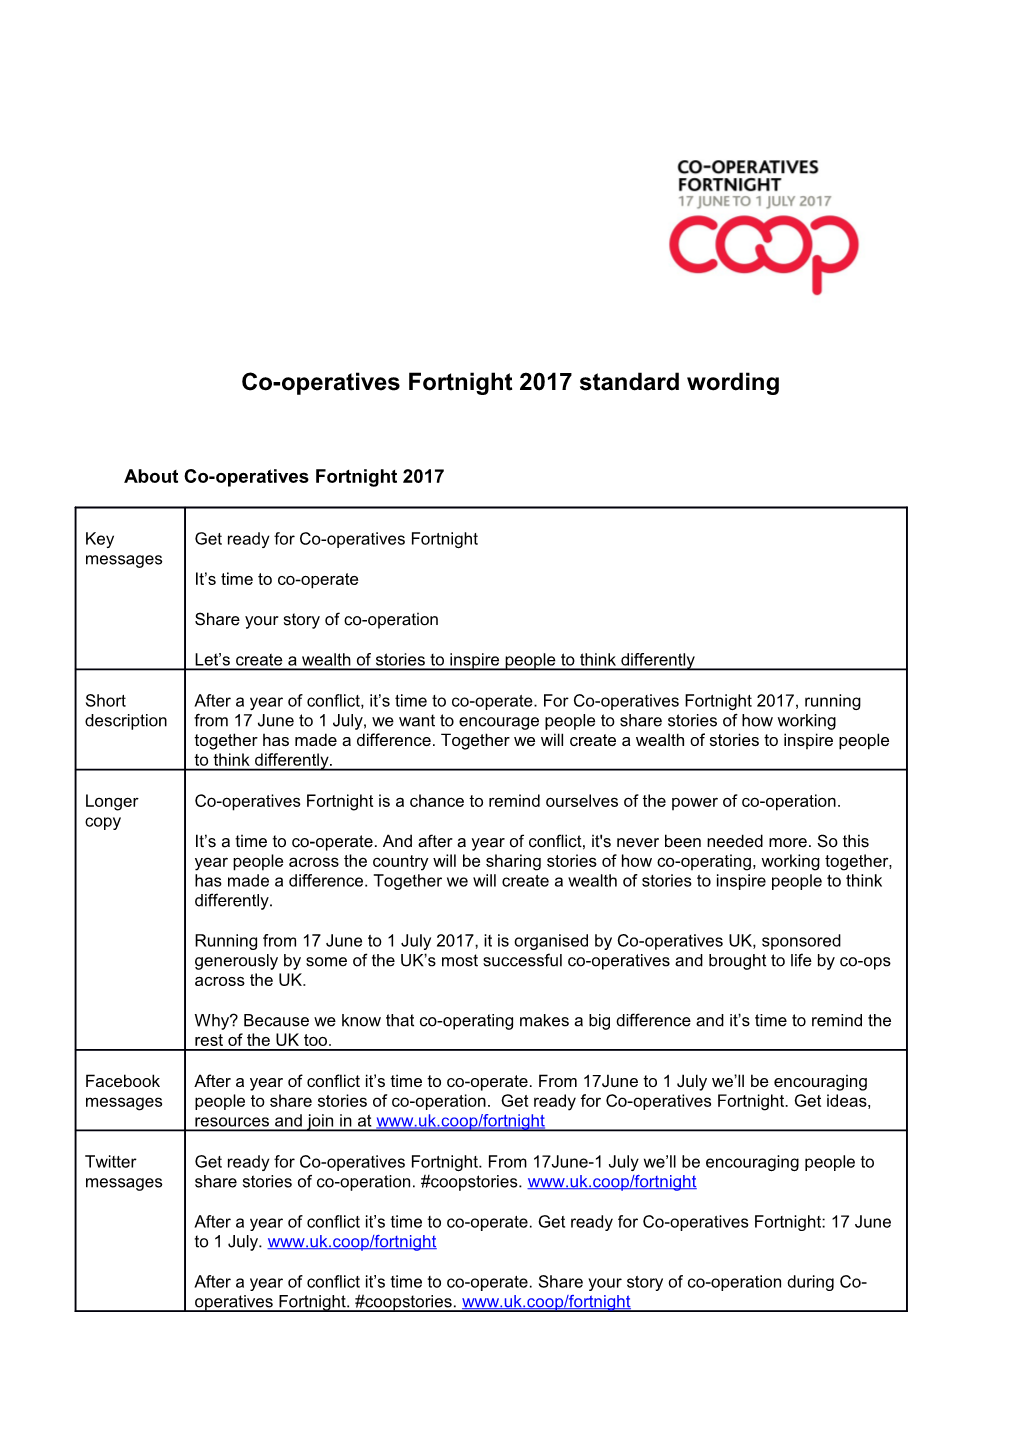 Co-Operatives Fortnight 2017 Standard Wording